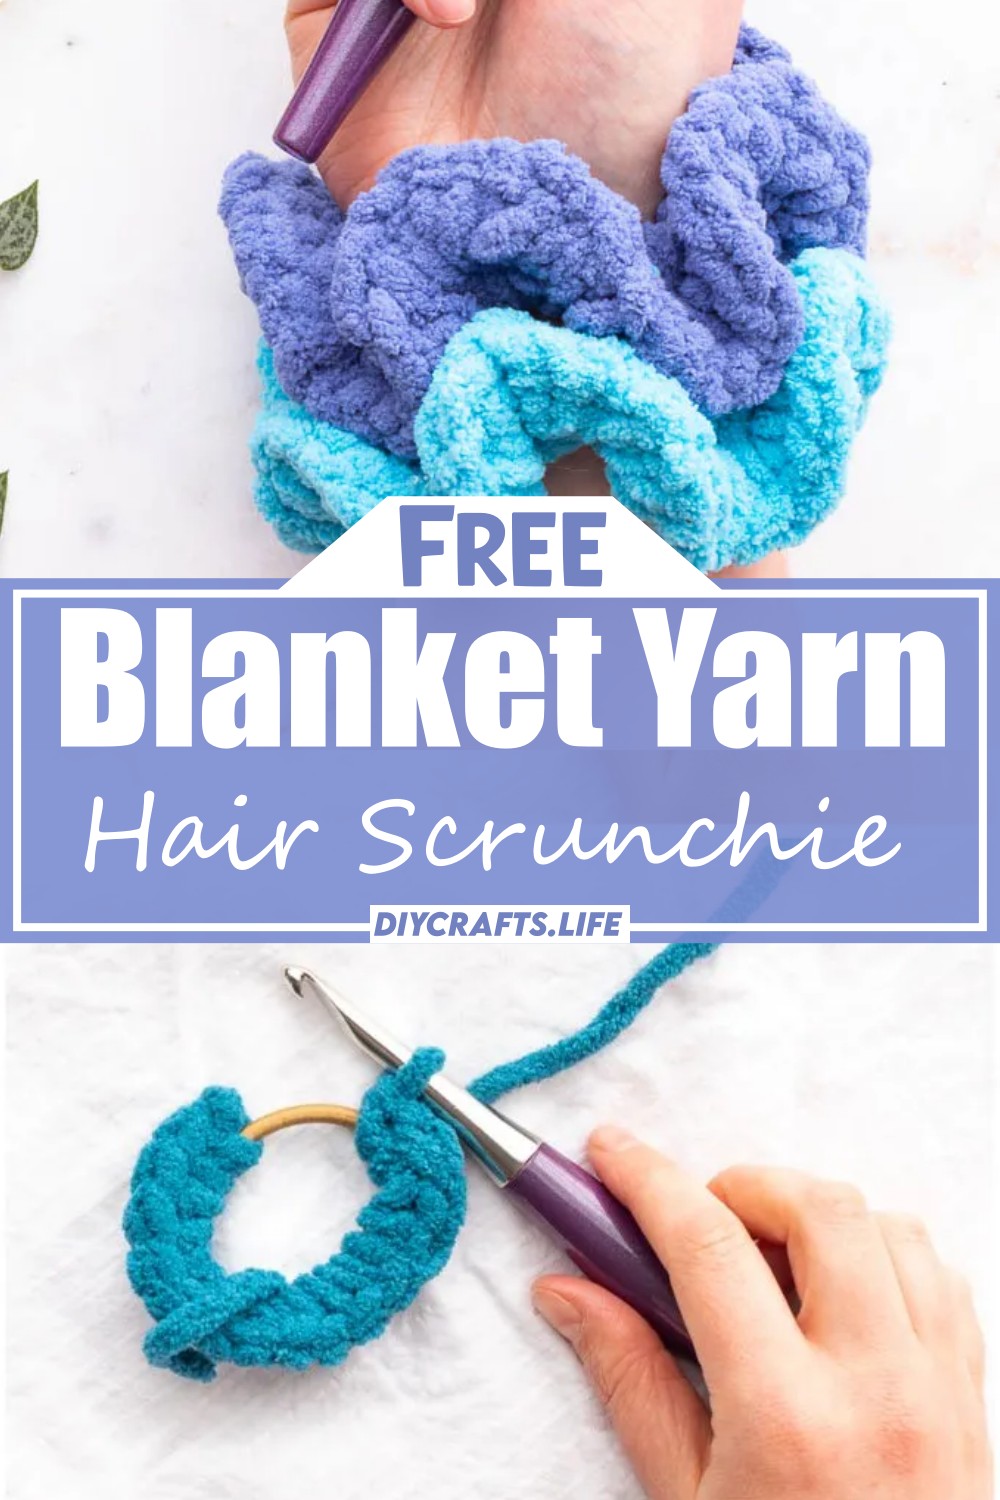 Blanket Yarn Hair Scrunchie Pattern